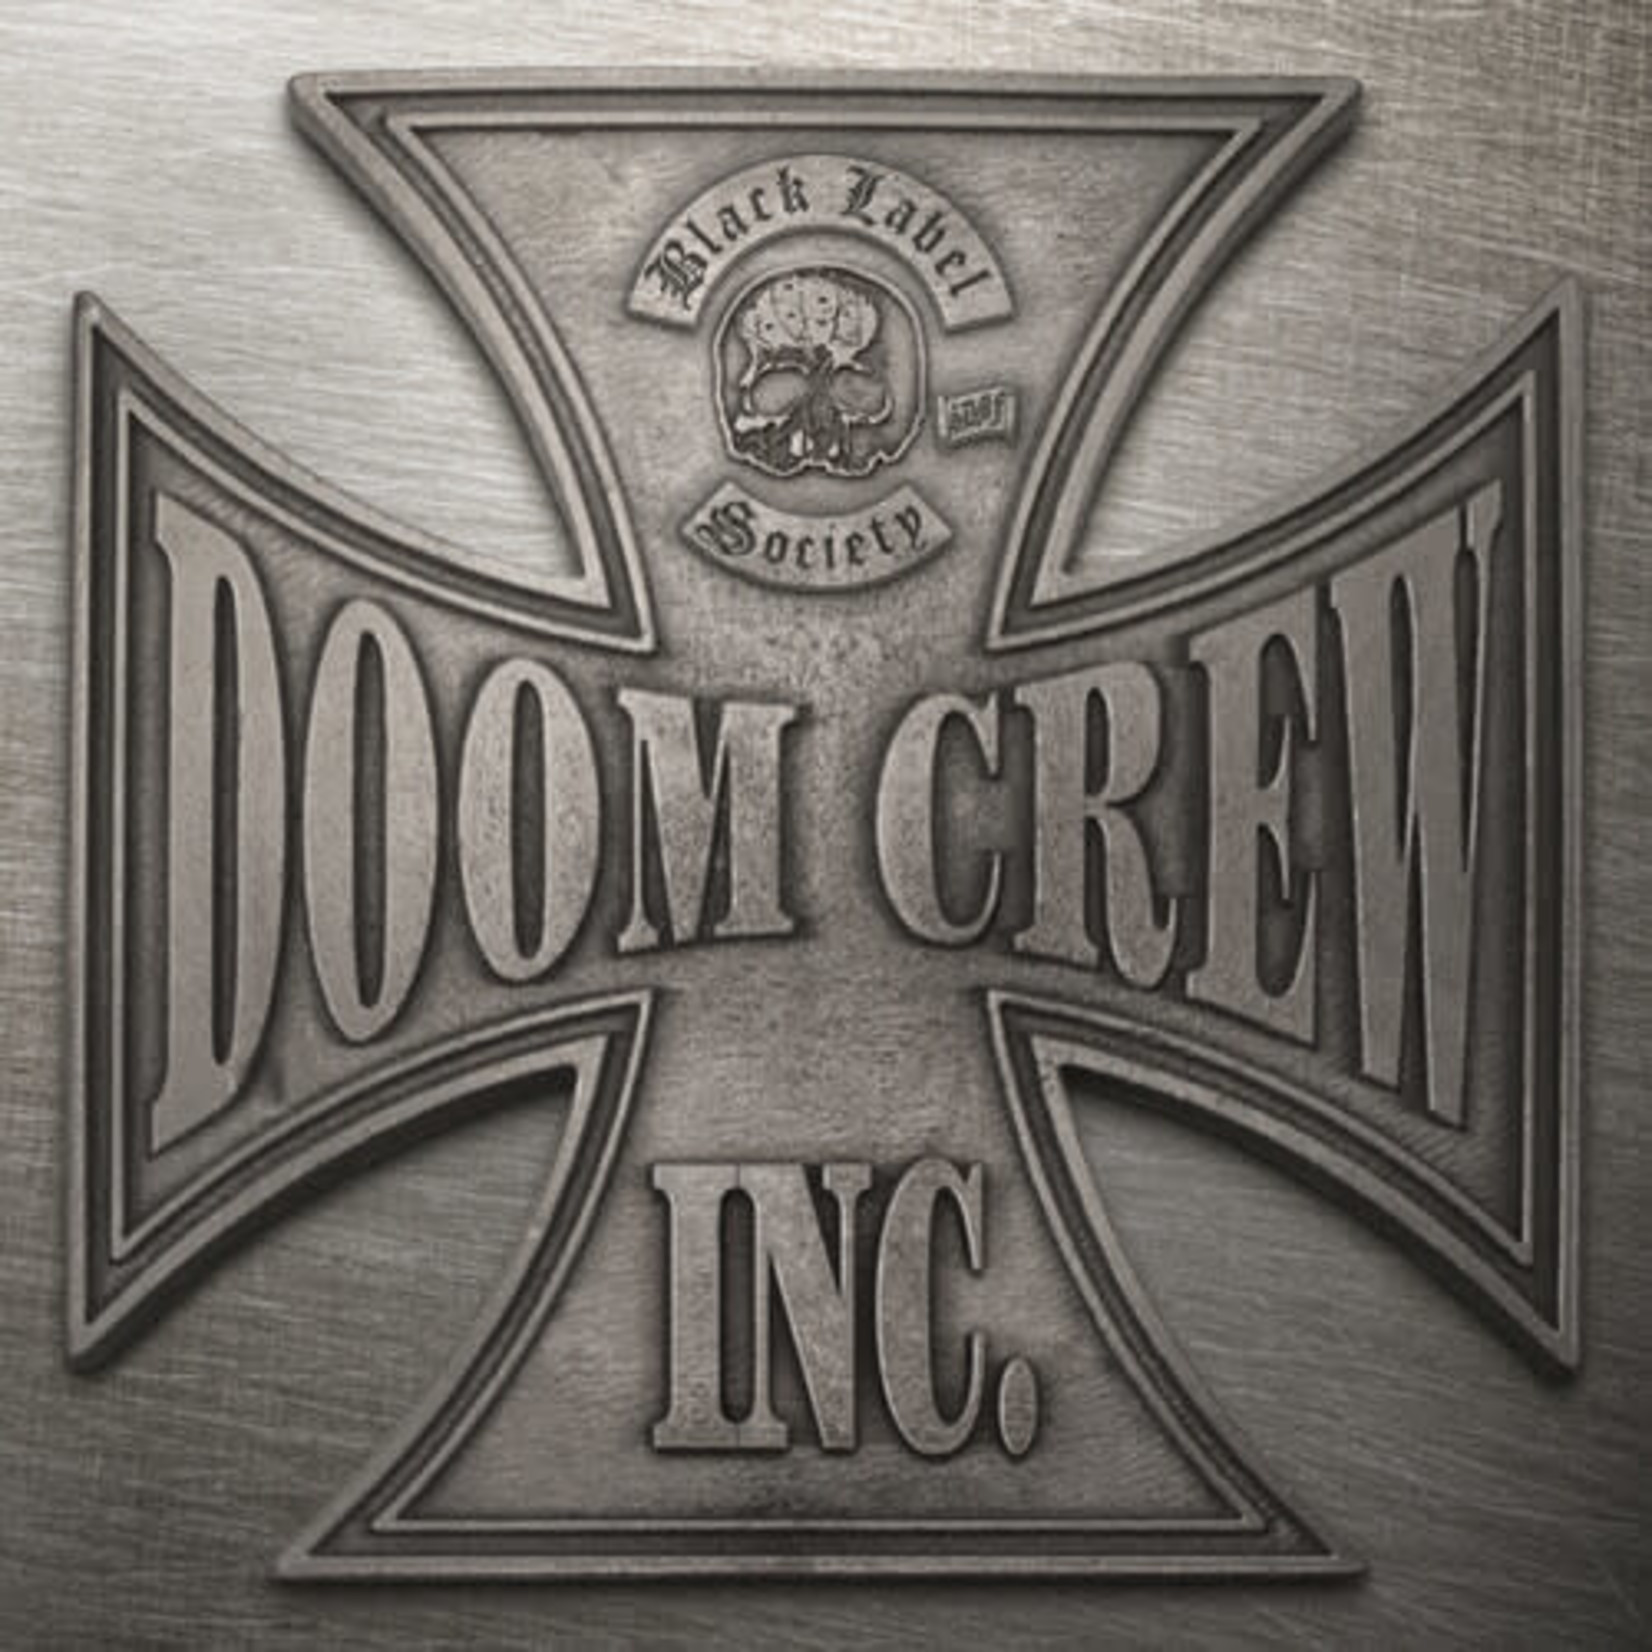 eOne Black Label Society - Doom Crew Inc (2LP) [Clear/Black/Grey]